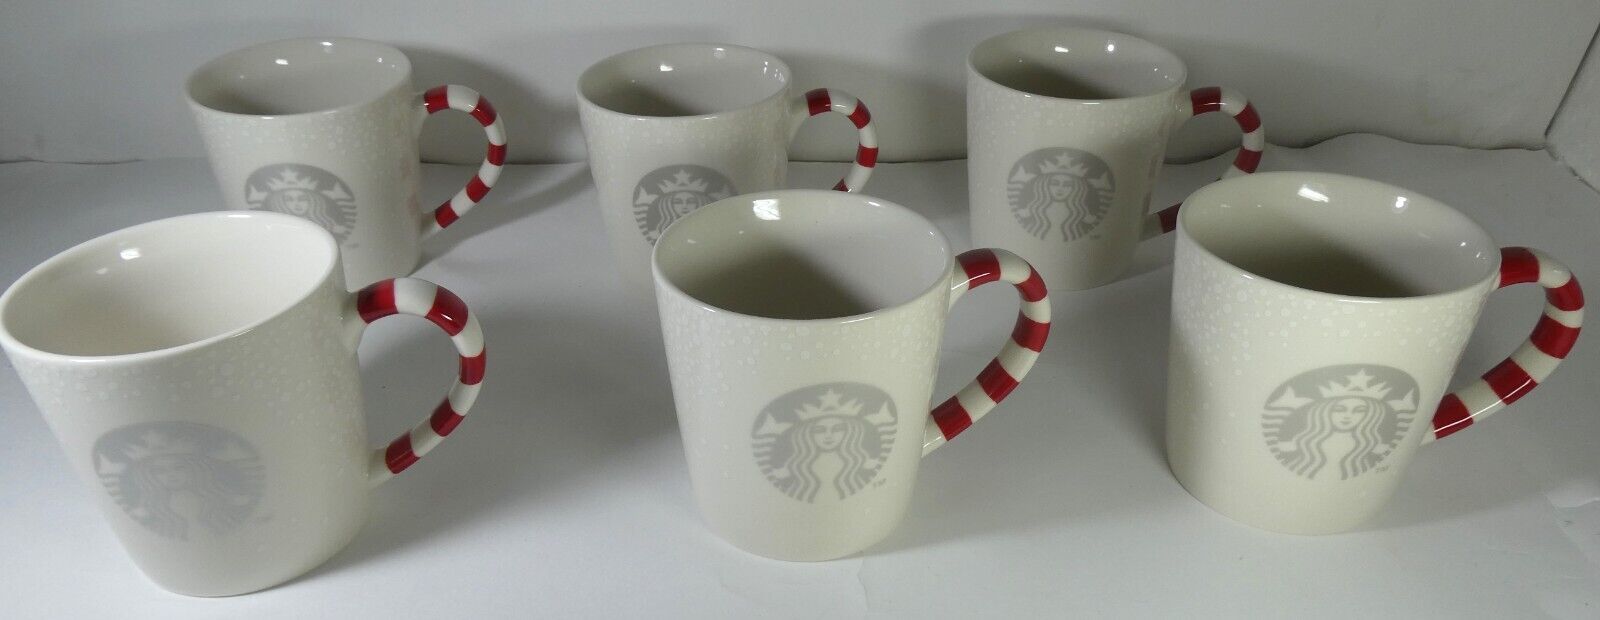 A Cup A Day: 2008 Starbucks Christmas Holiday Candy Cane Mug